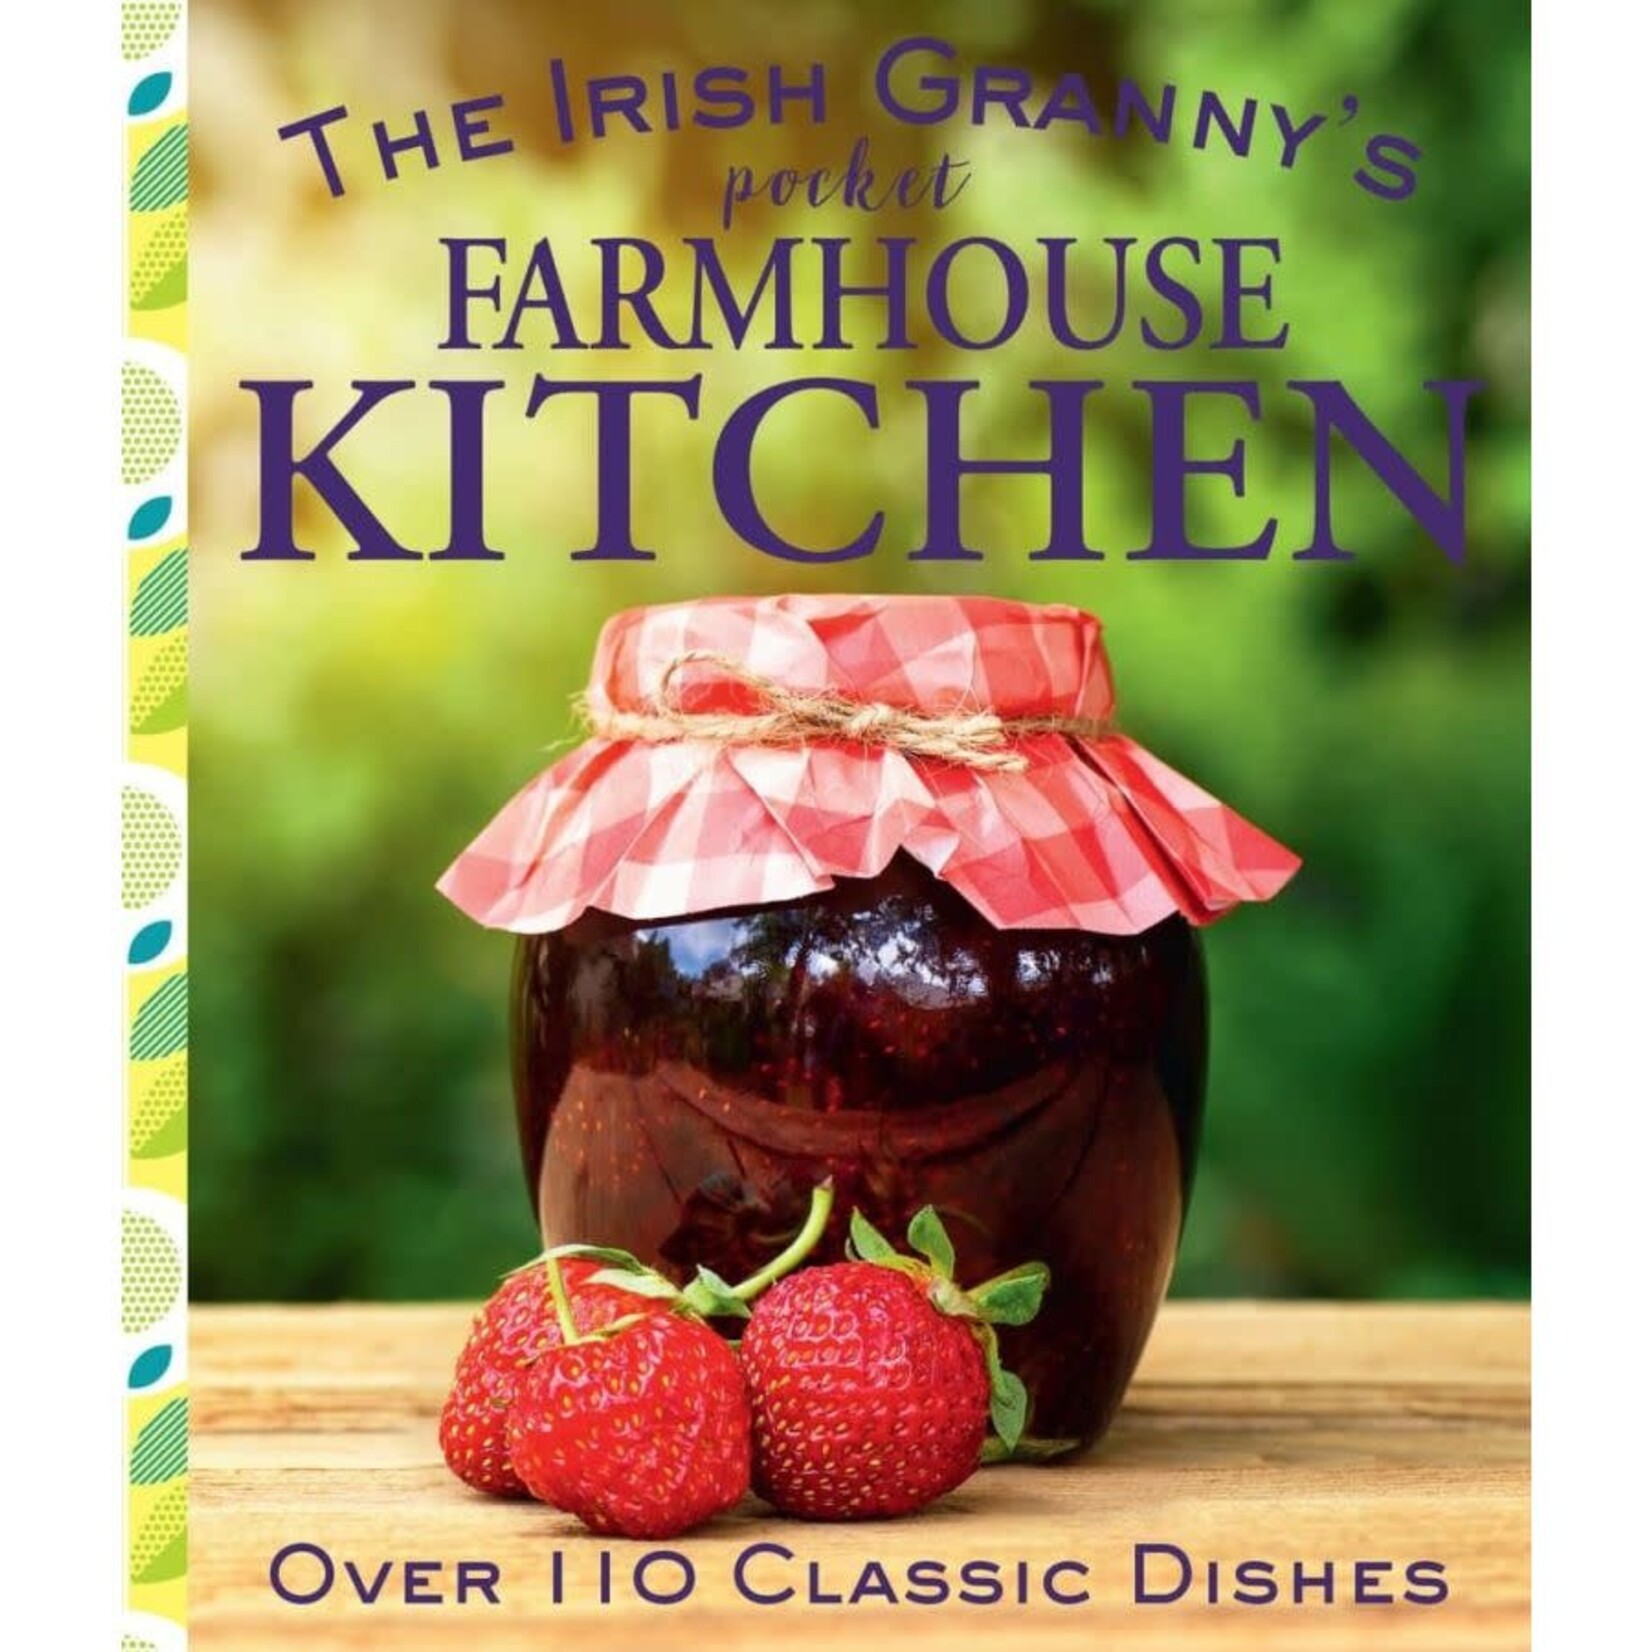 Celtic Books "The Irish Granny's Pocket Farmhouse Kitchen"